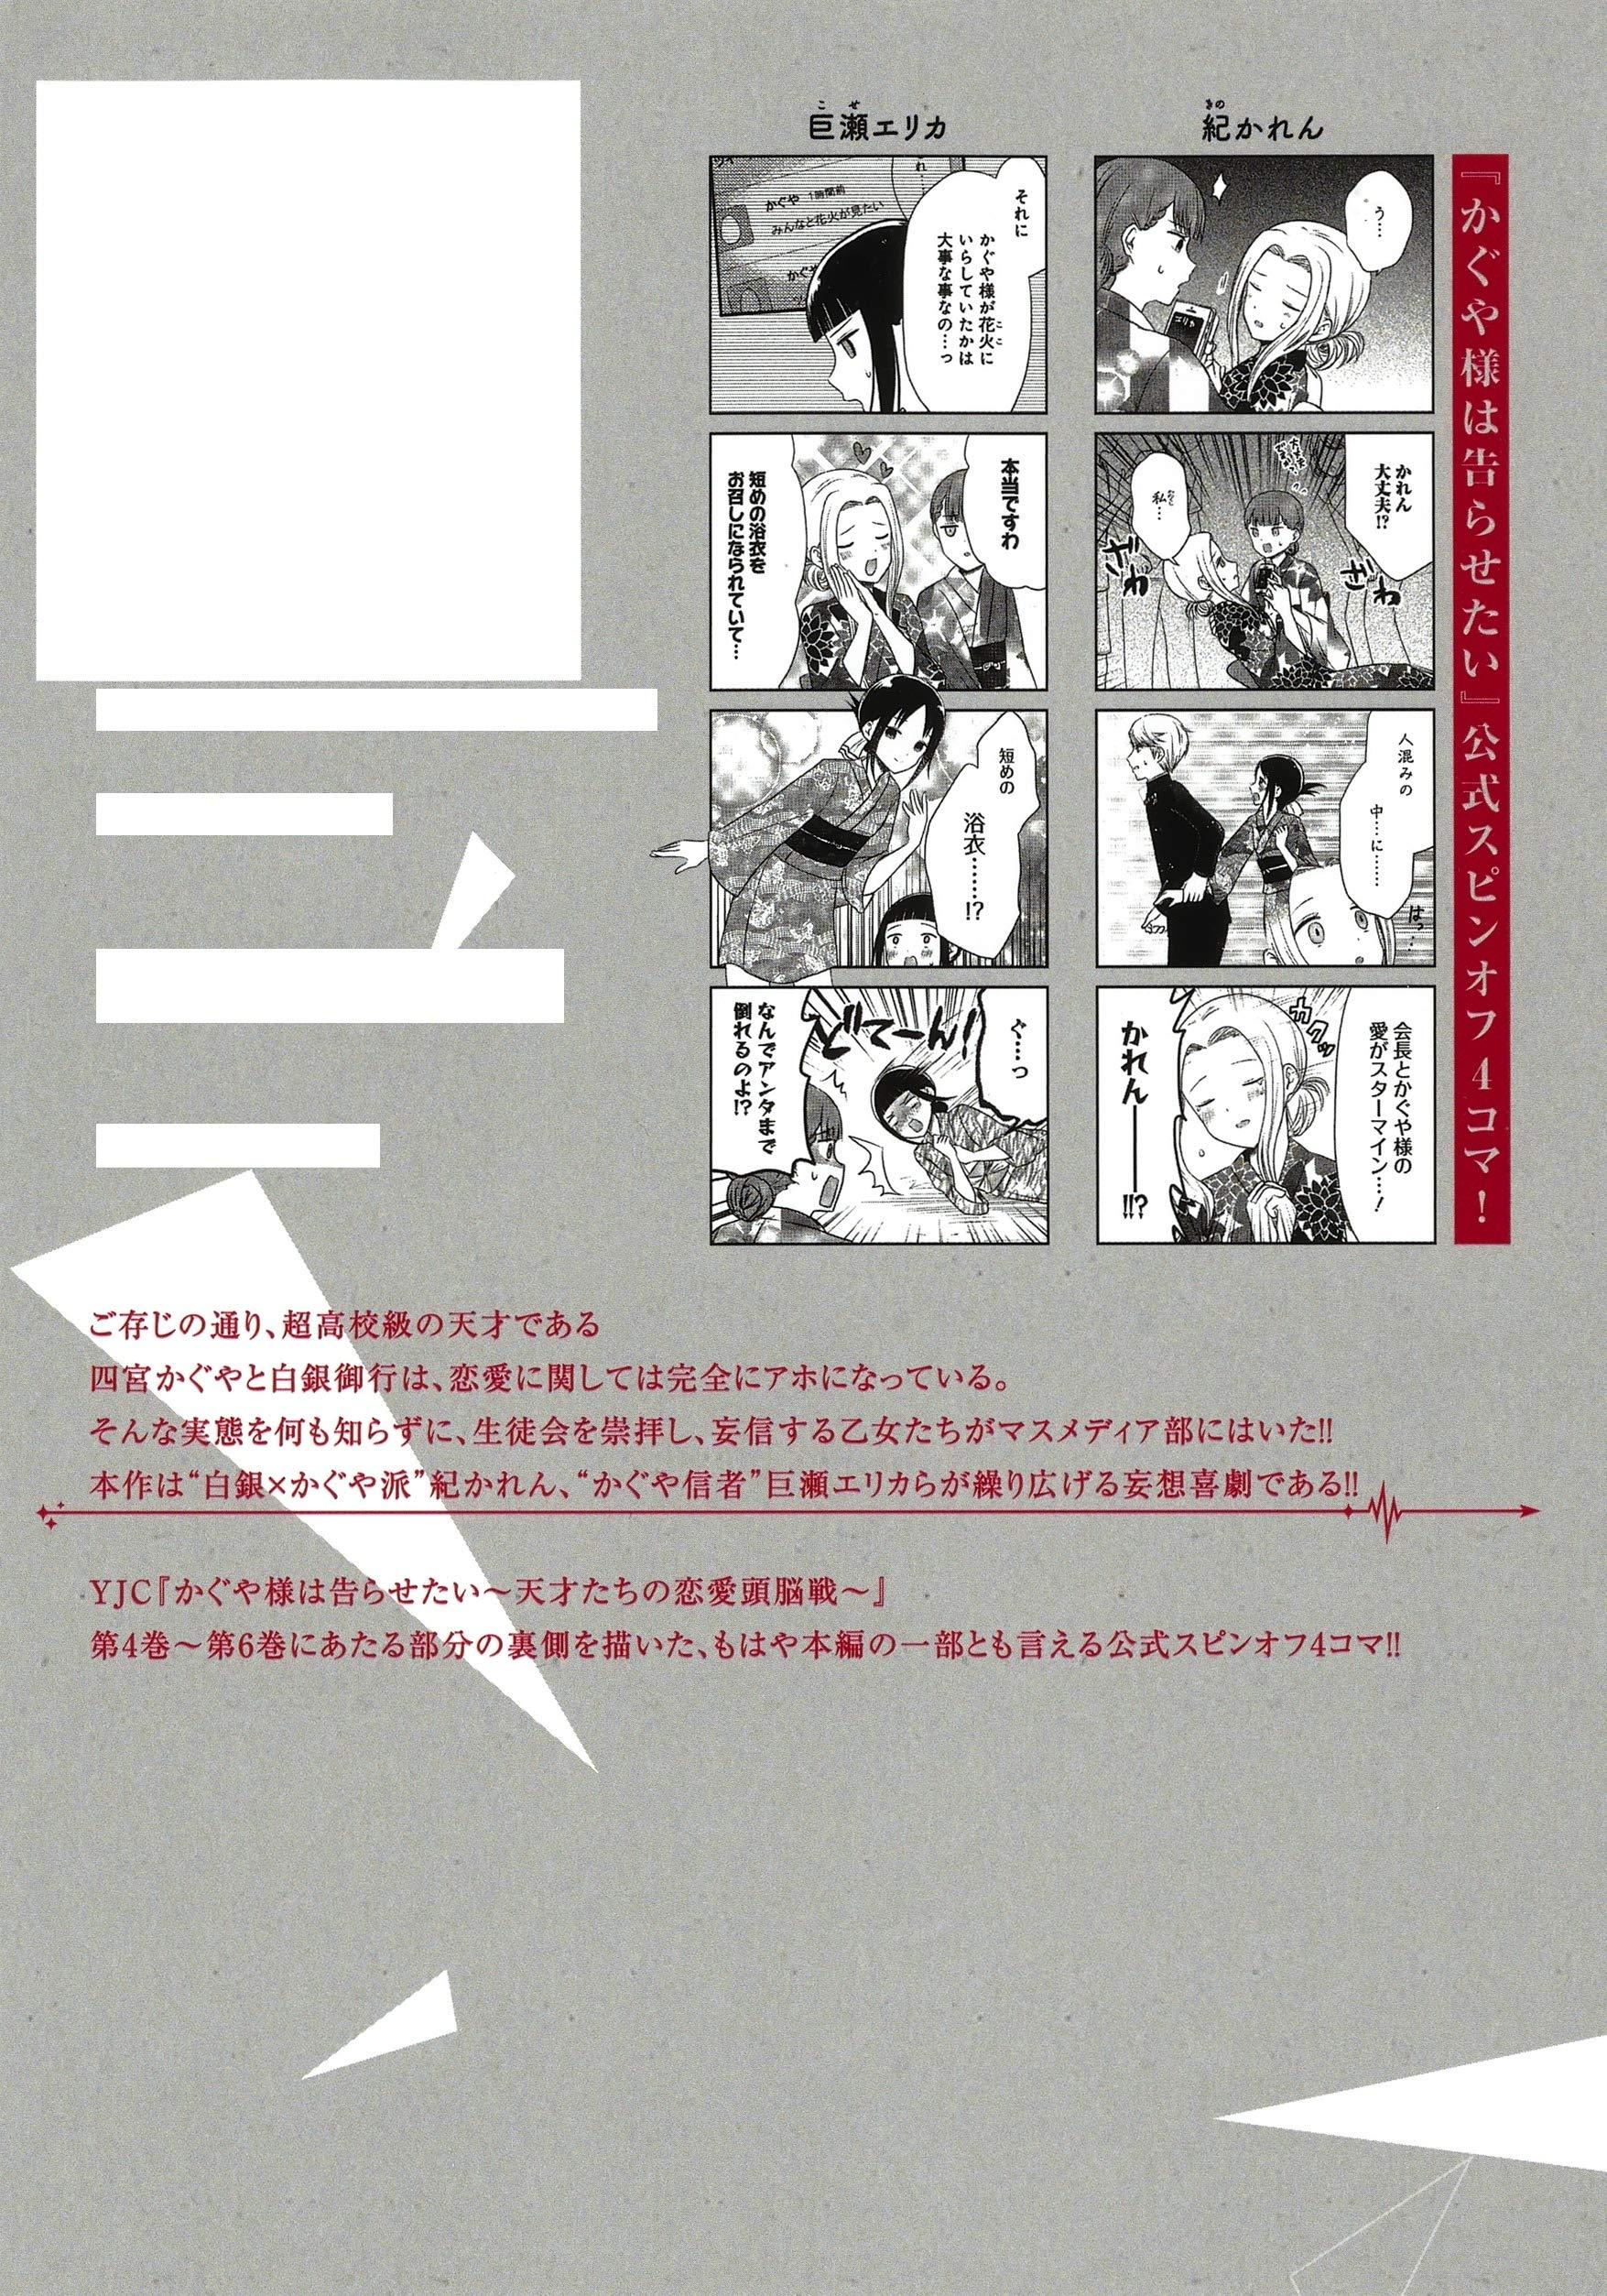 Kaguya-sama wo Kataritai 2 (Japanese Edition)